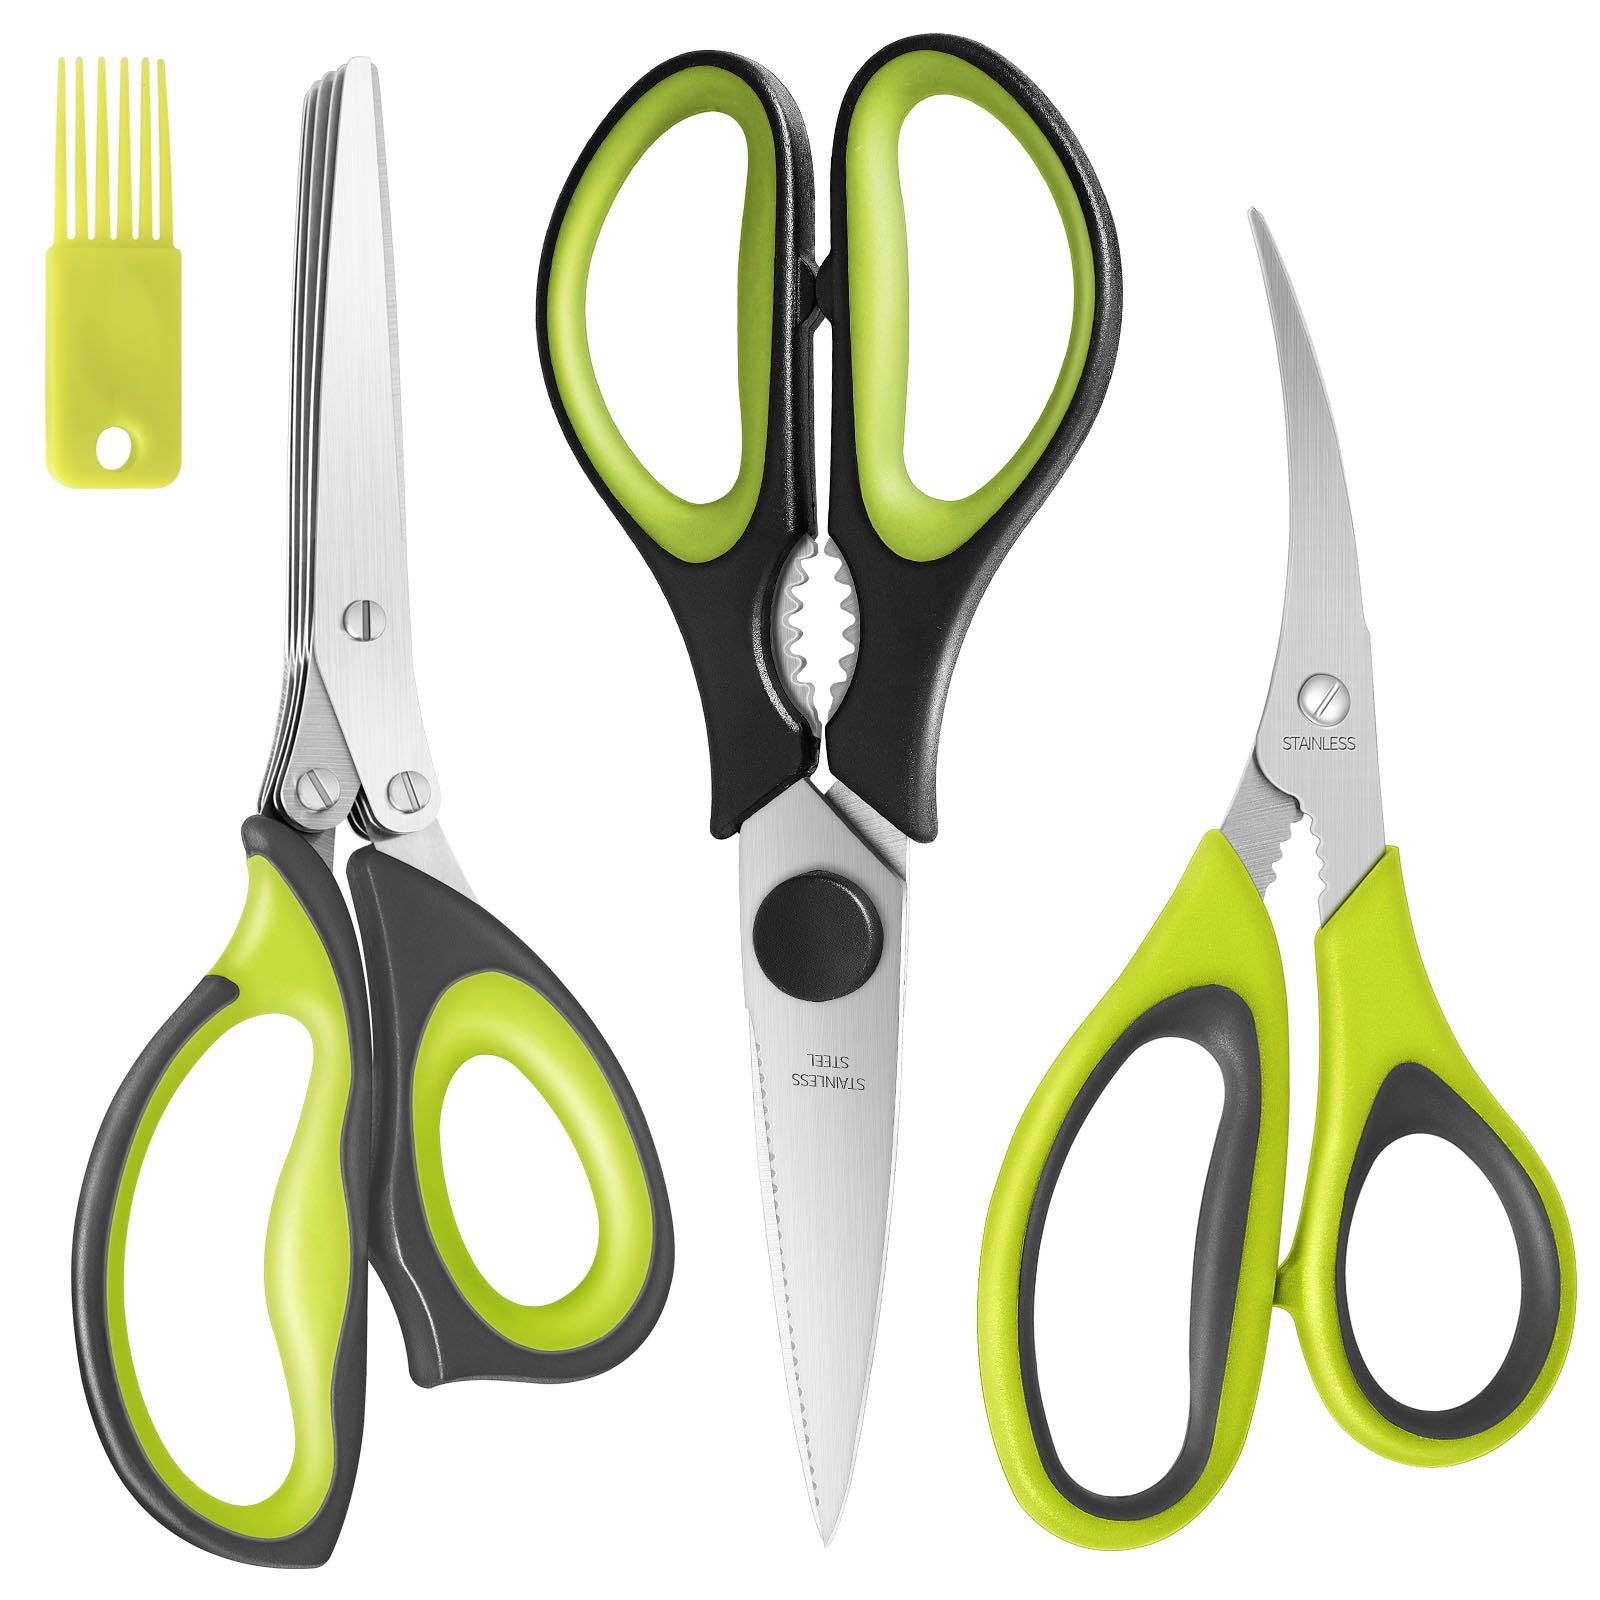 Asdirne Kitchen Scissors Set of 3